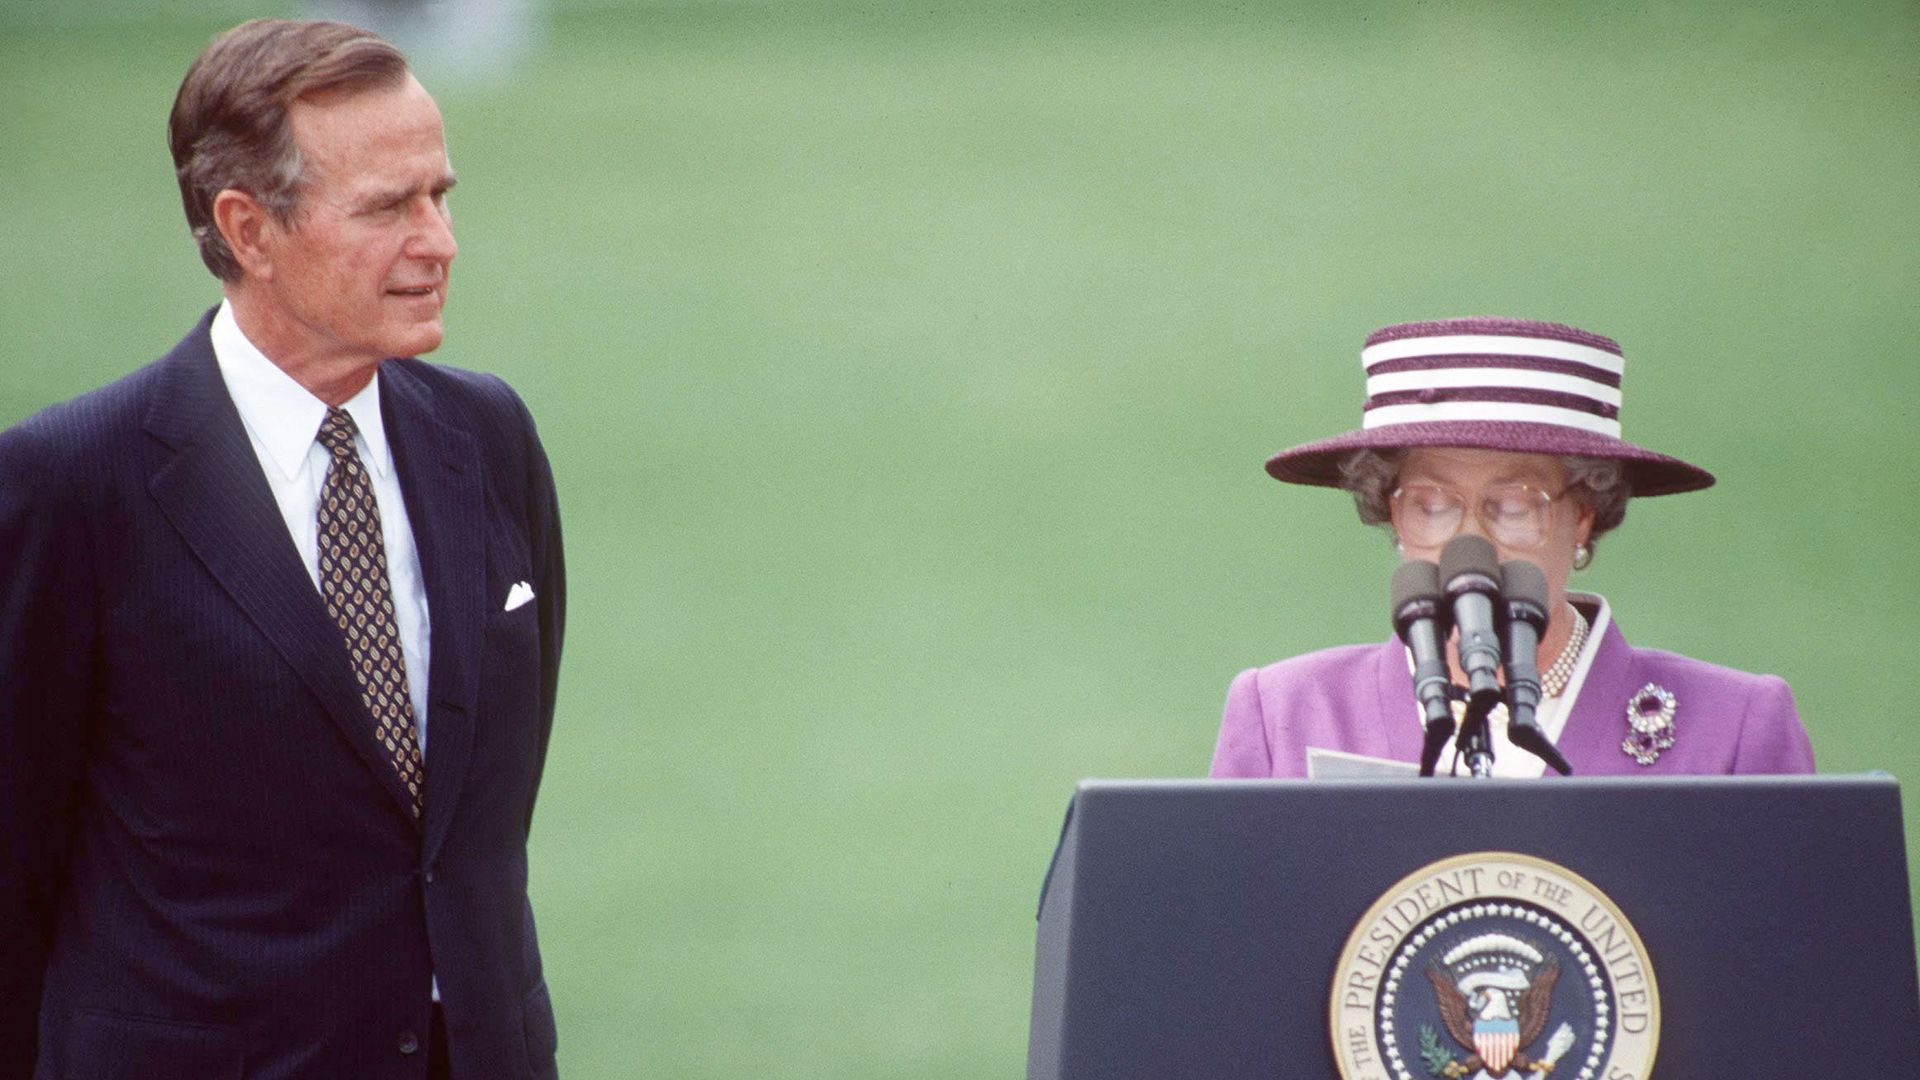 queen giving speech next to President Bush 